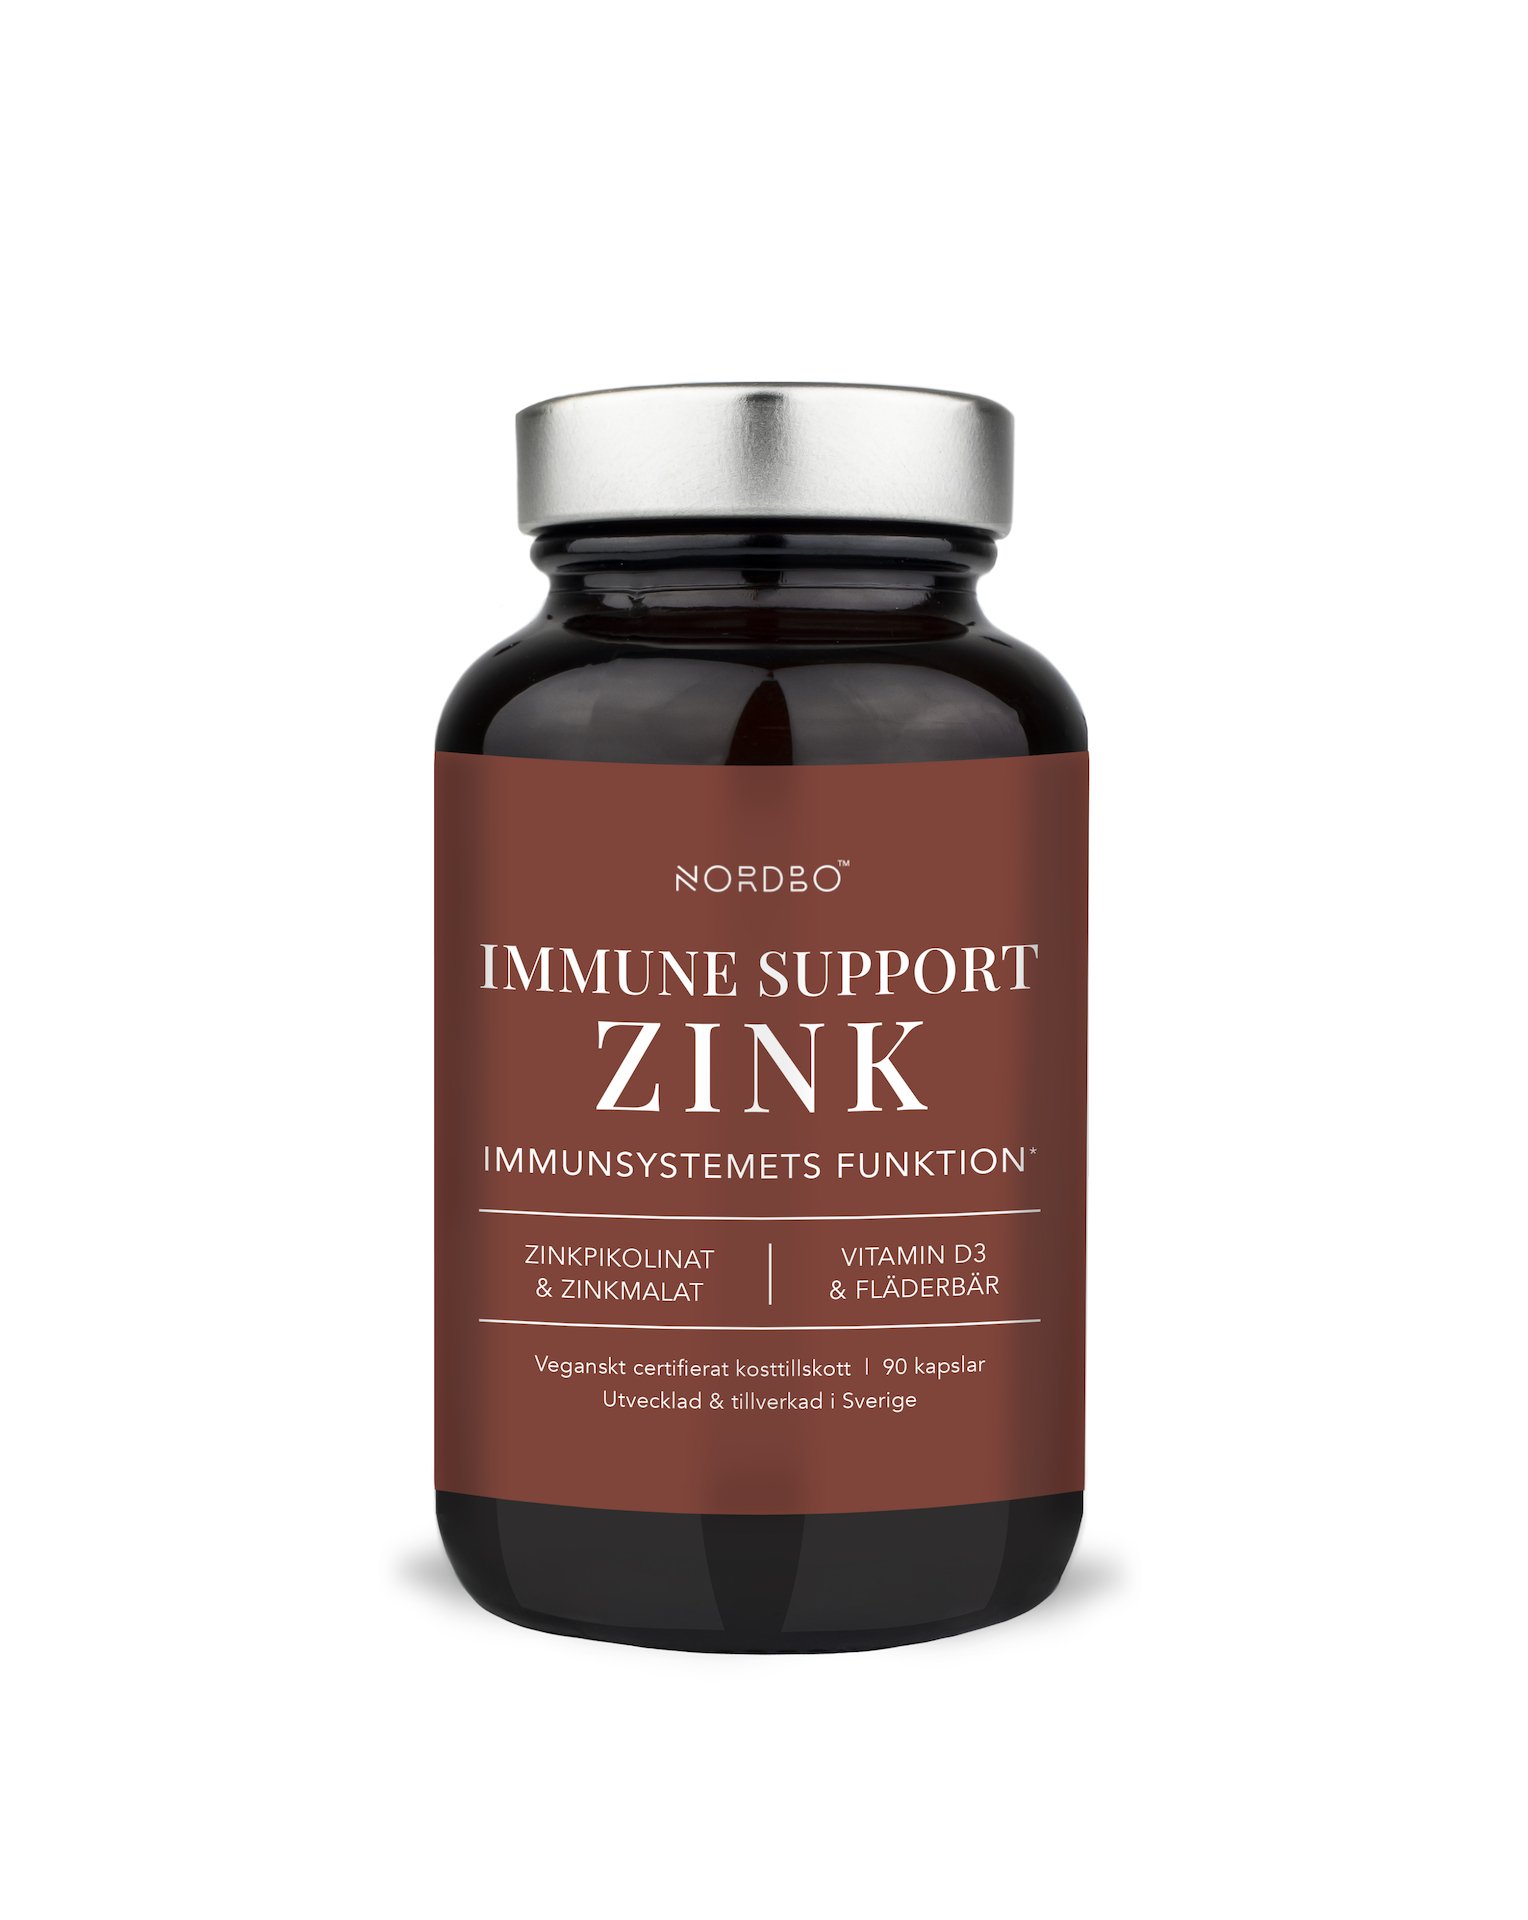 Nordbo Immune Support Zink, 90 kap